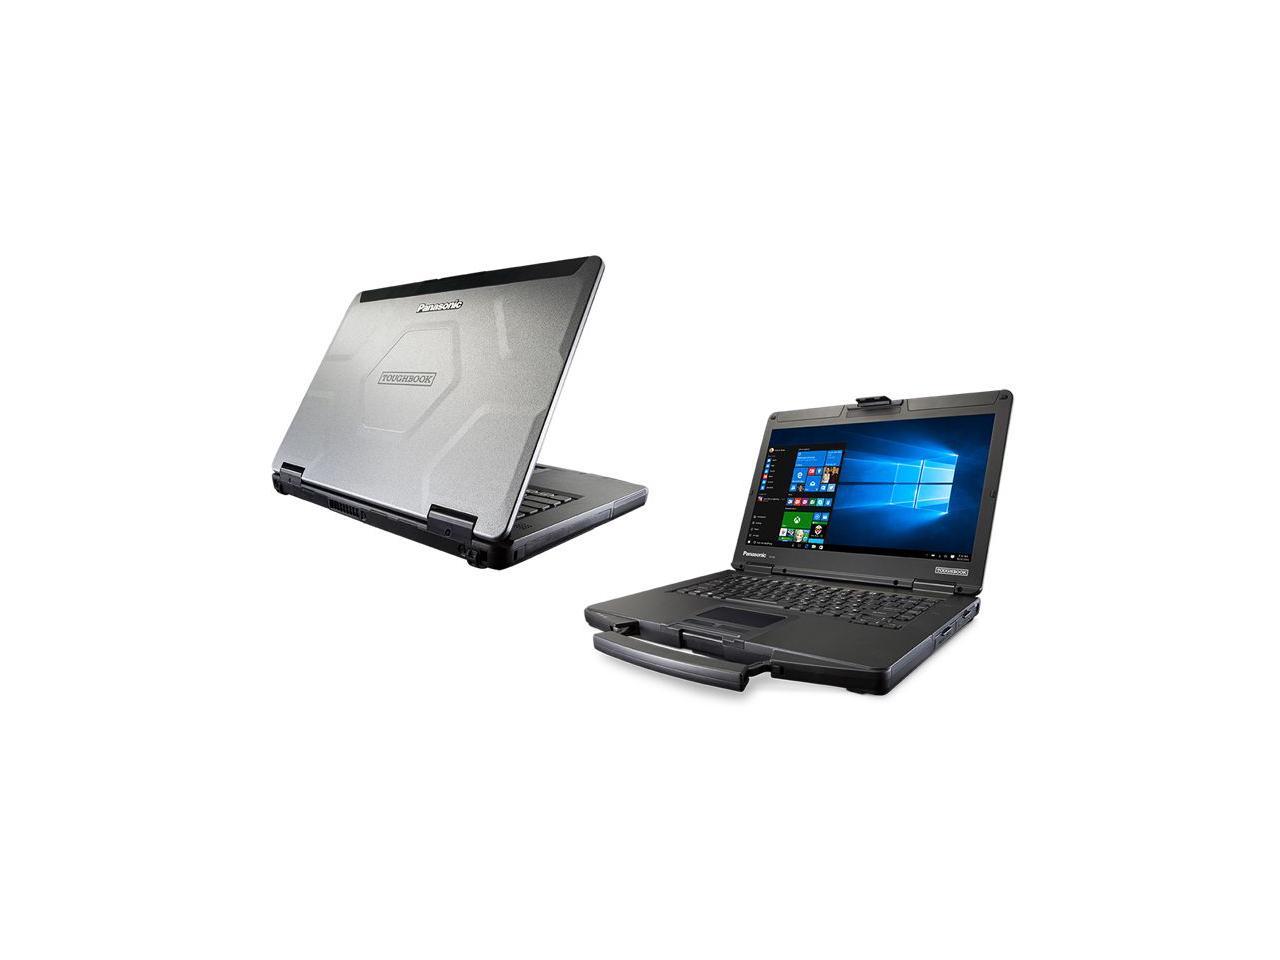 Panasonic Toughbook CF-54, Rugged Laptop, Intel Core i5 5300U @ 2.30GHz, Touch, 14